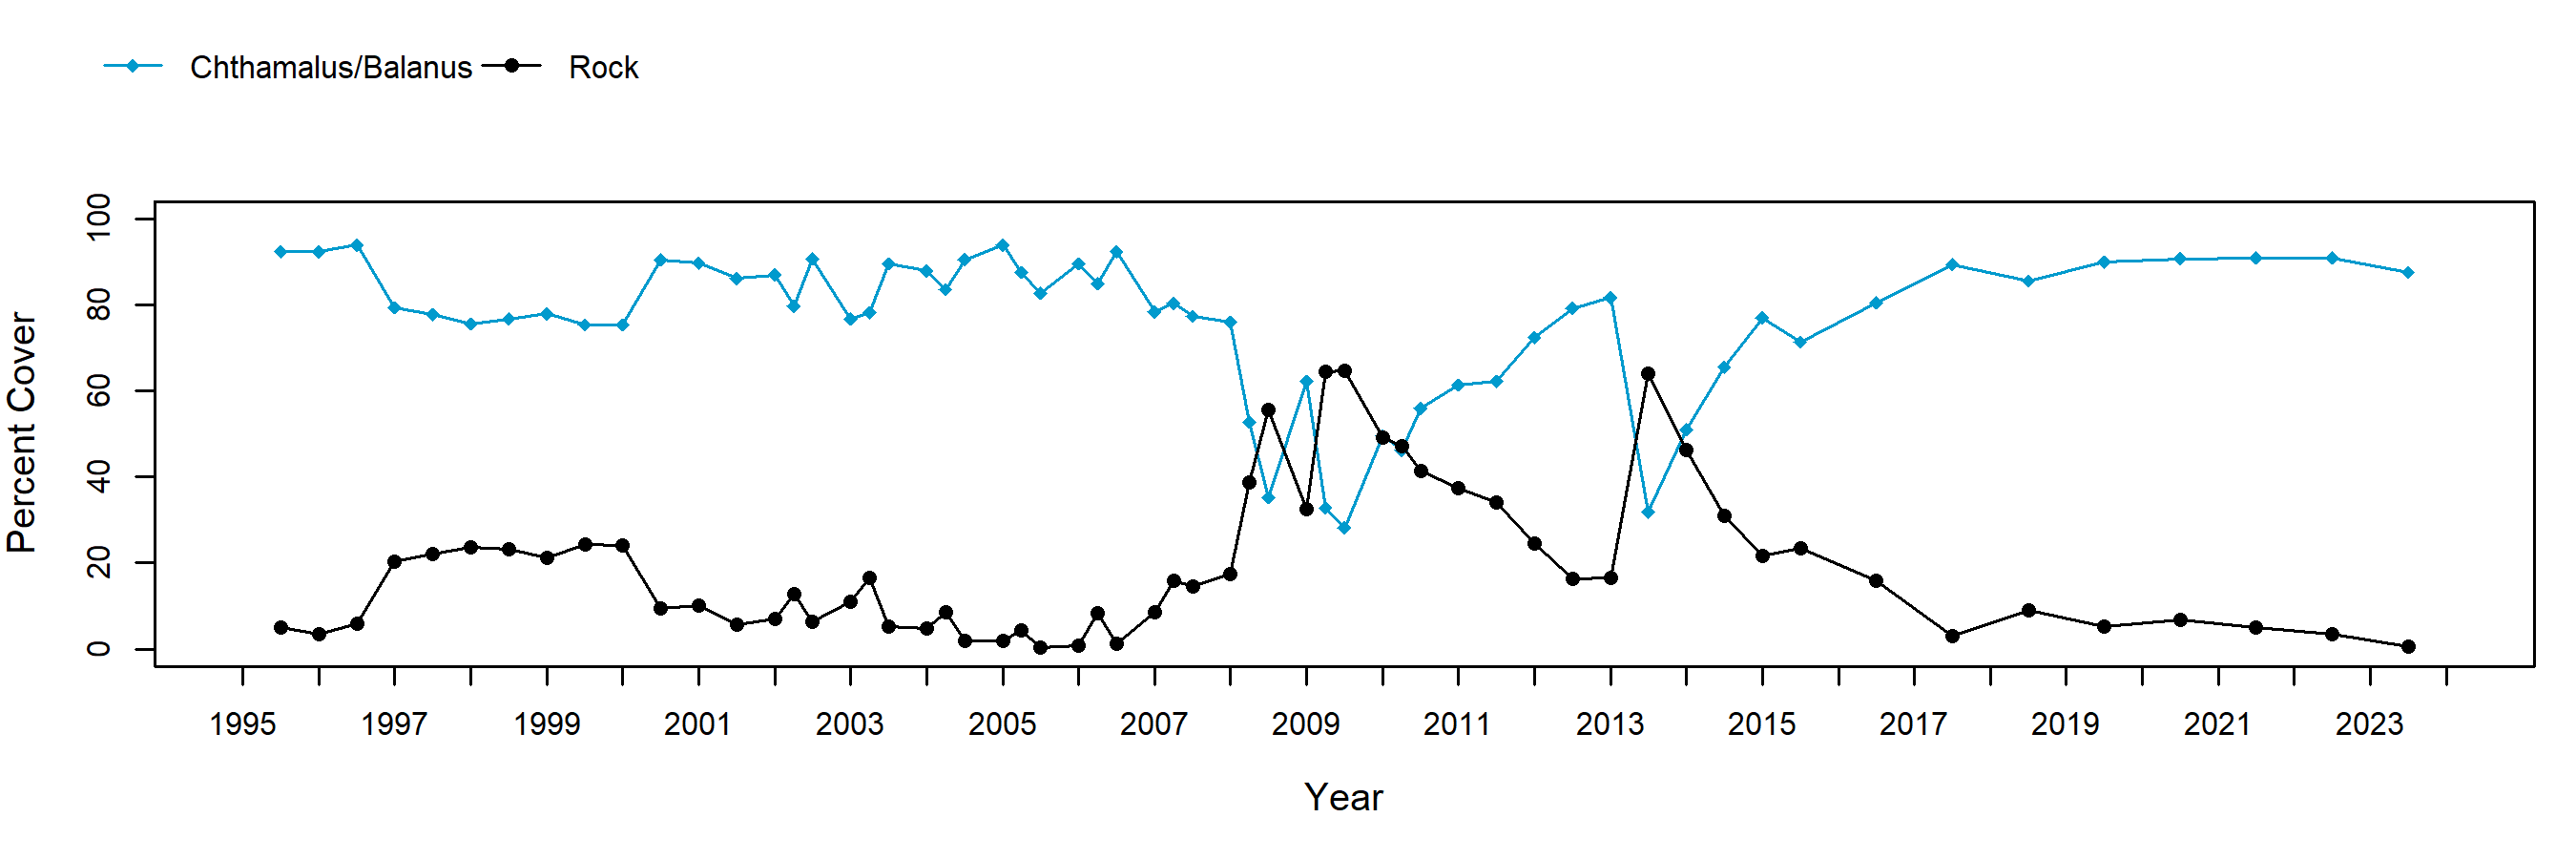 Shell Beach barnacle trend plot